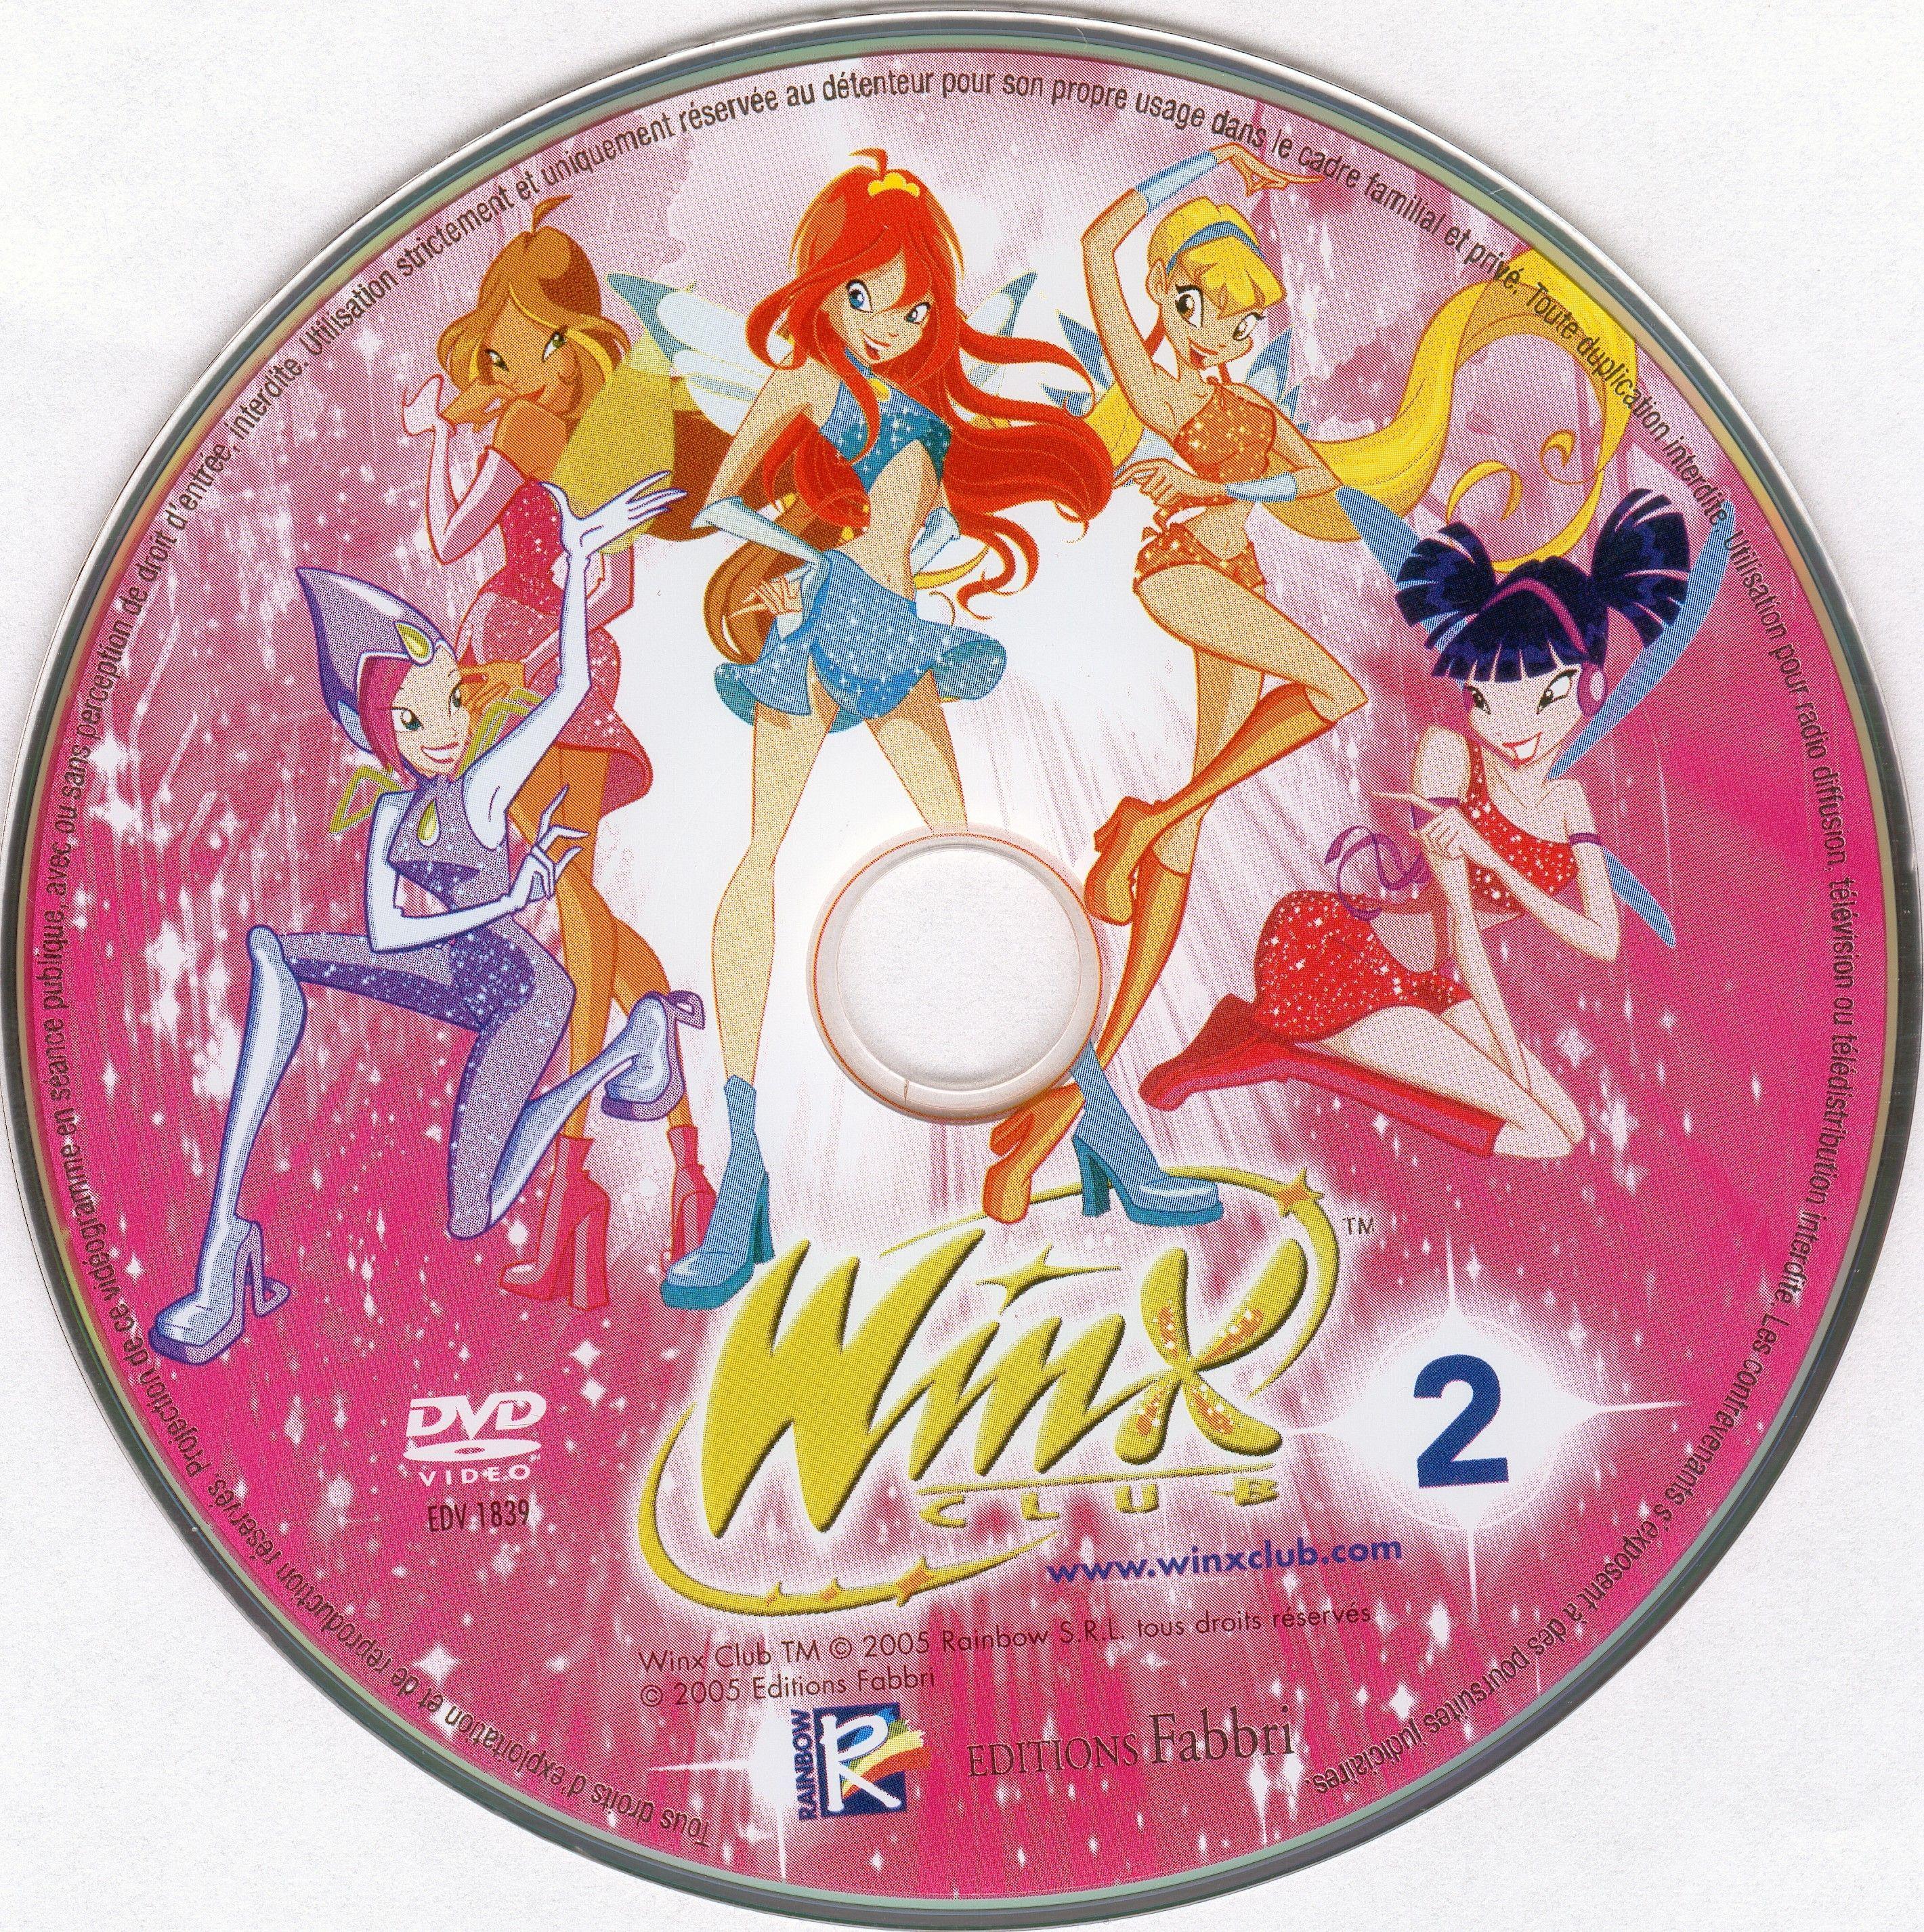 Winx Club vol 02